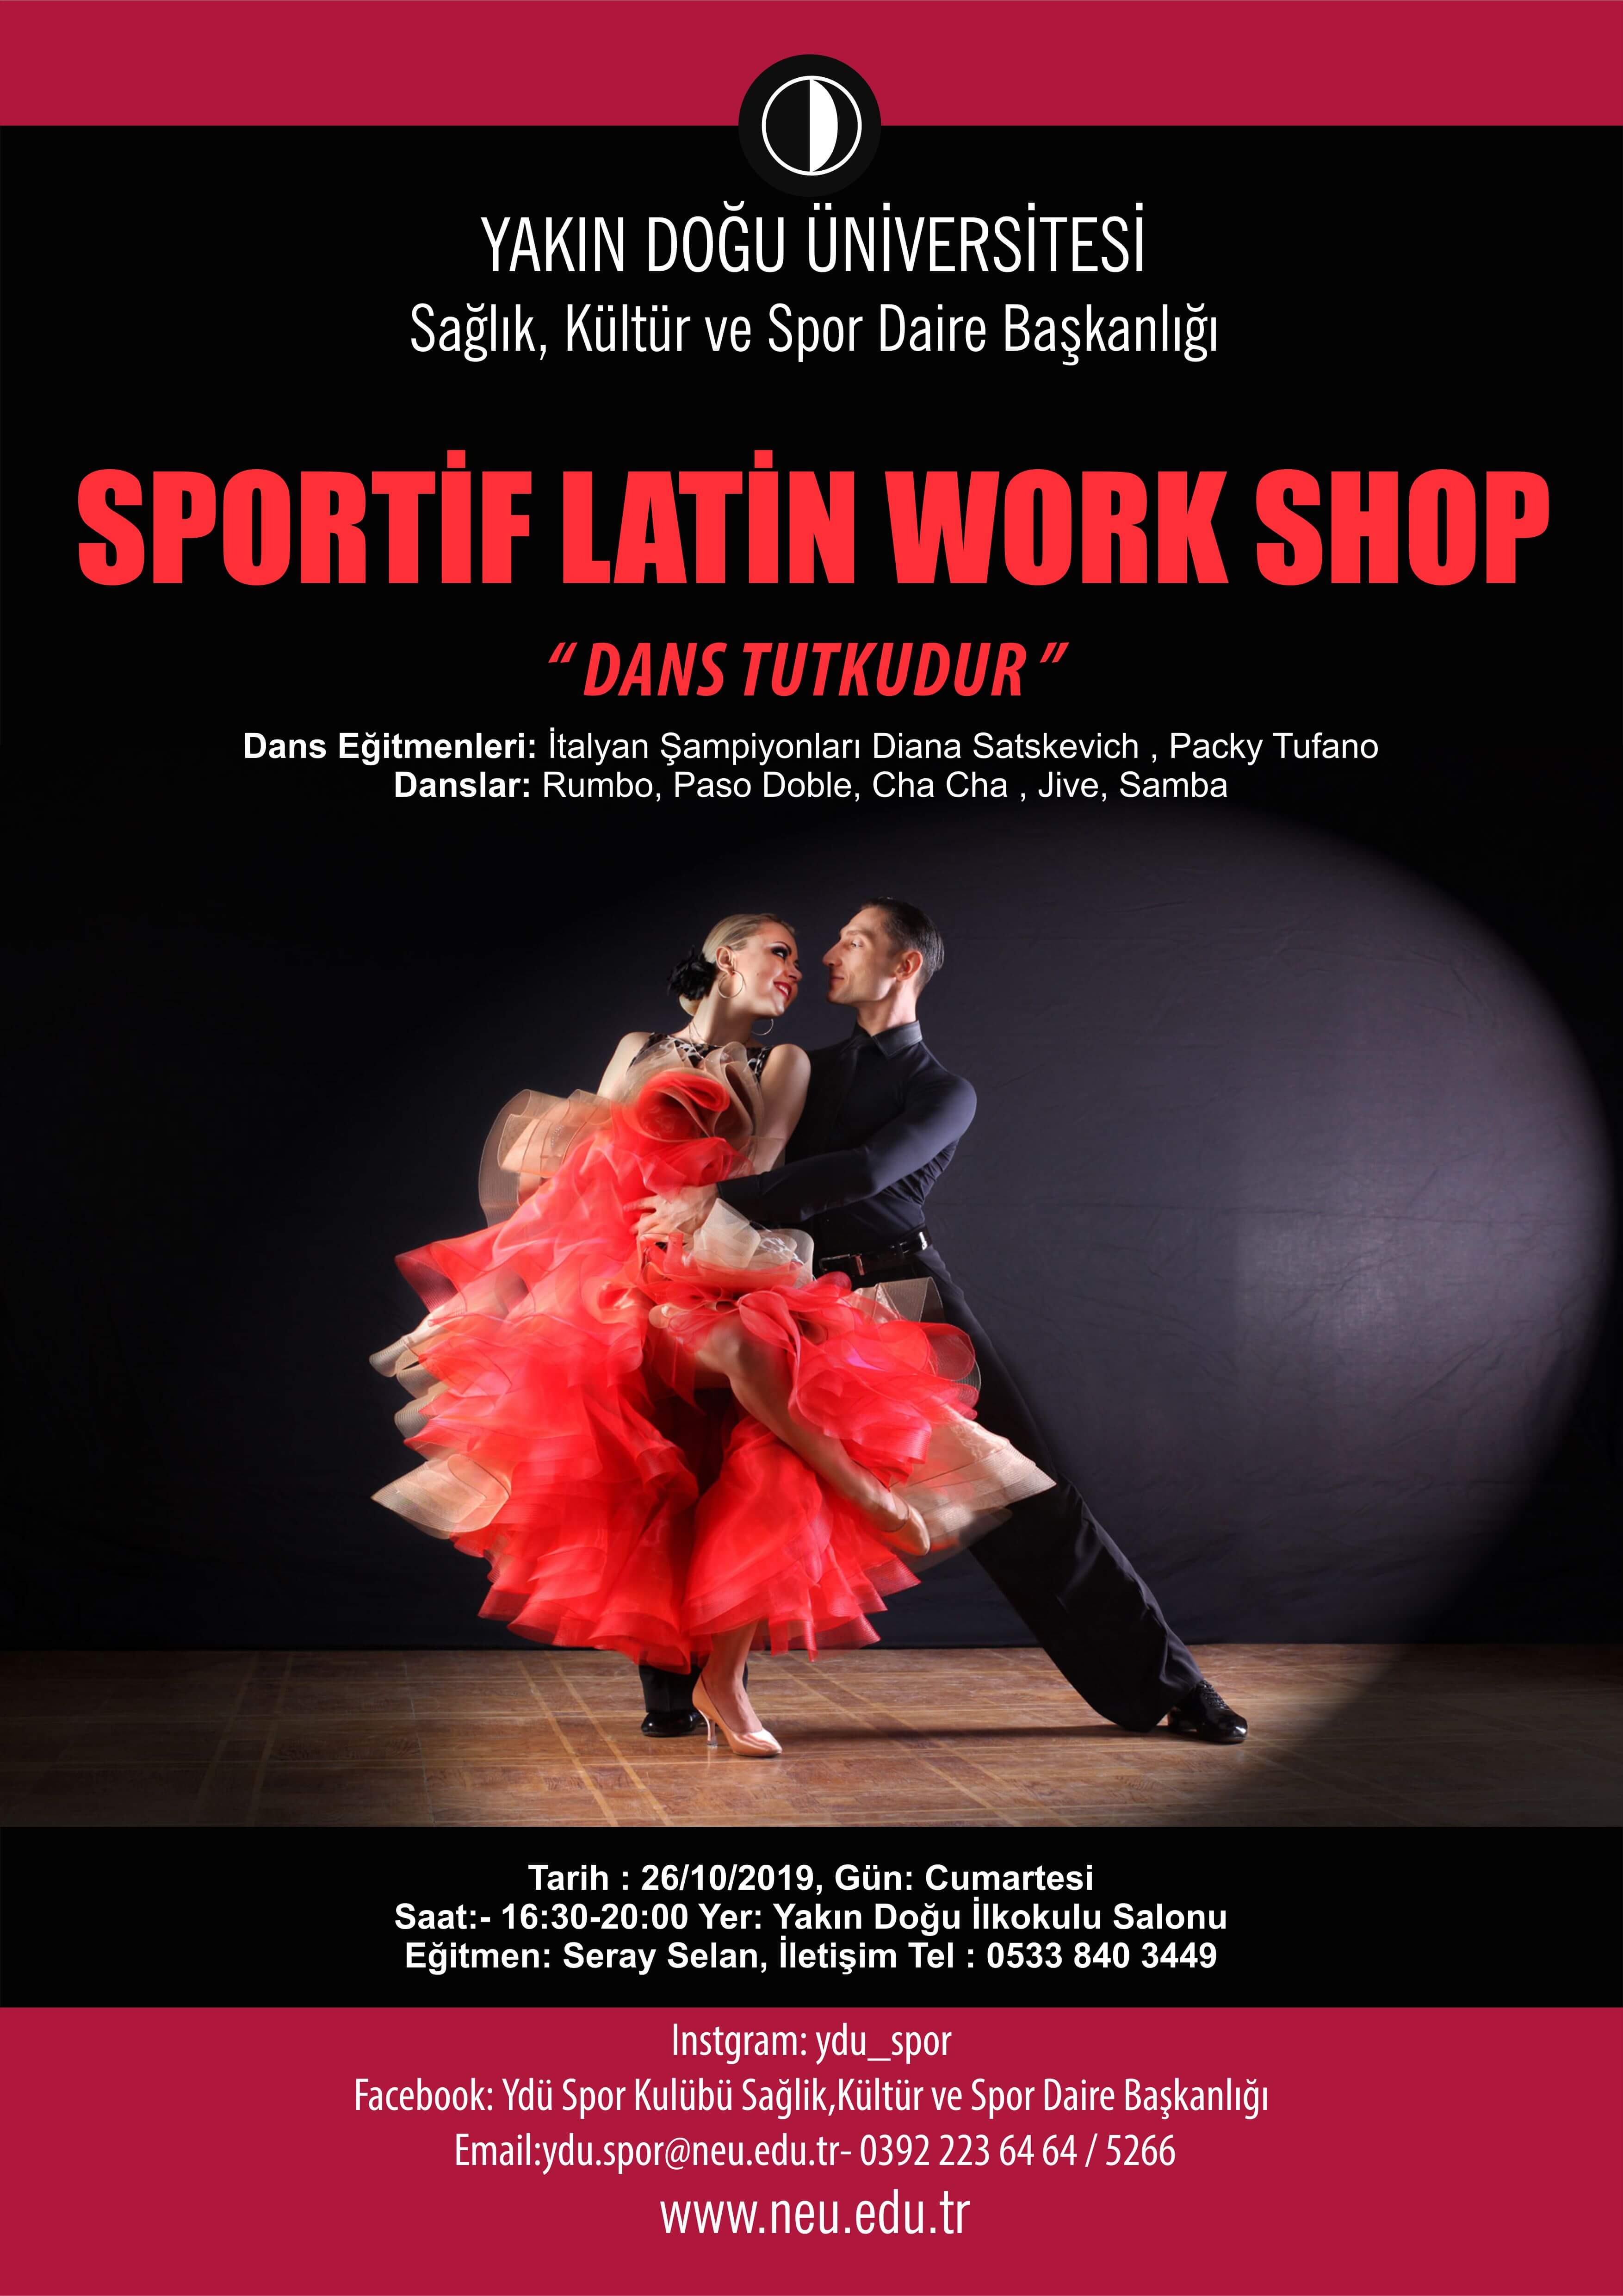 Sportif Latin Work Shop: “Dans Tutkudur”